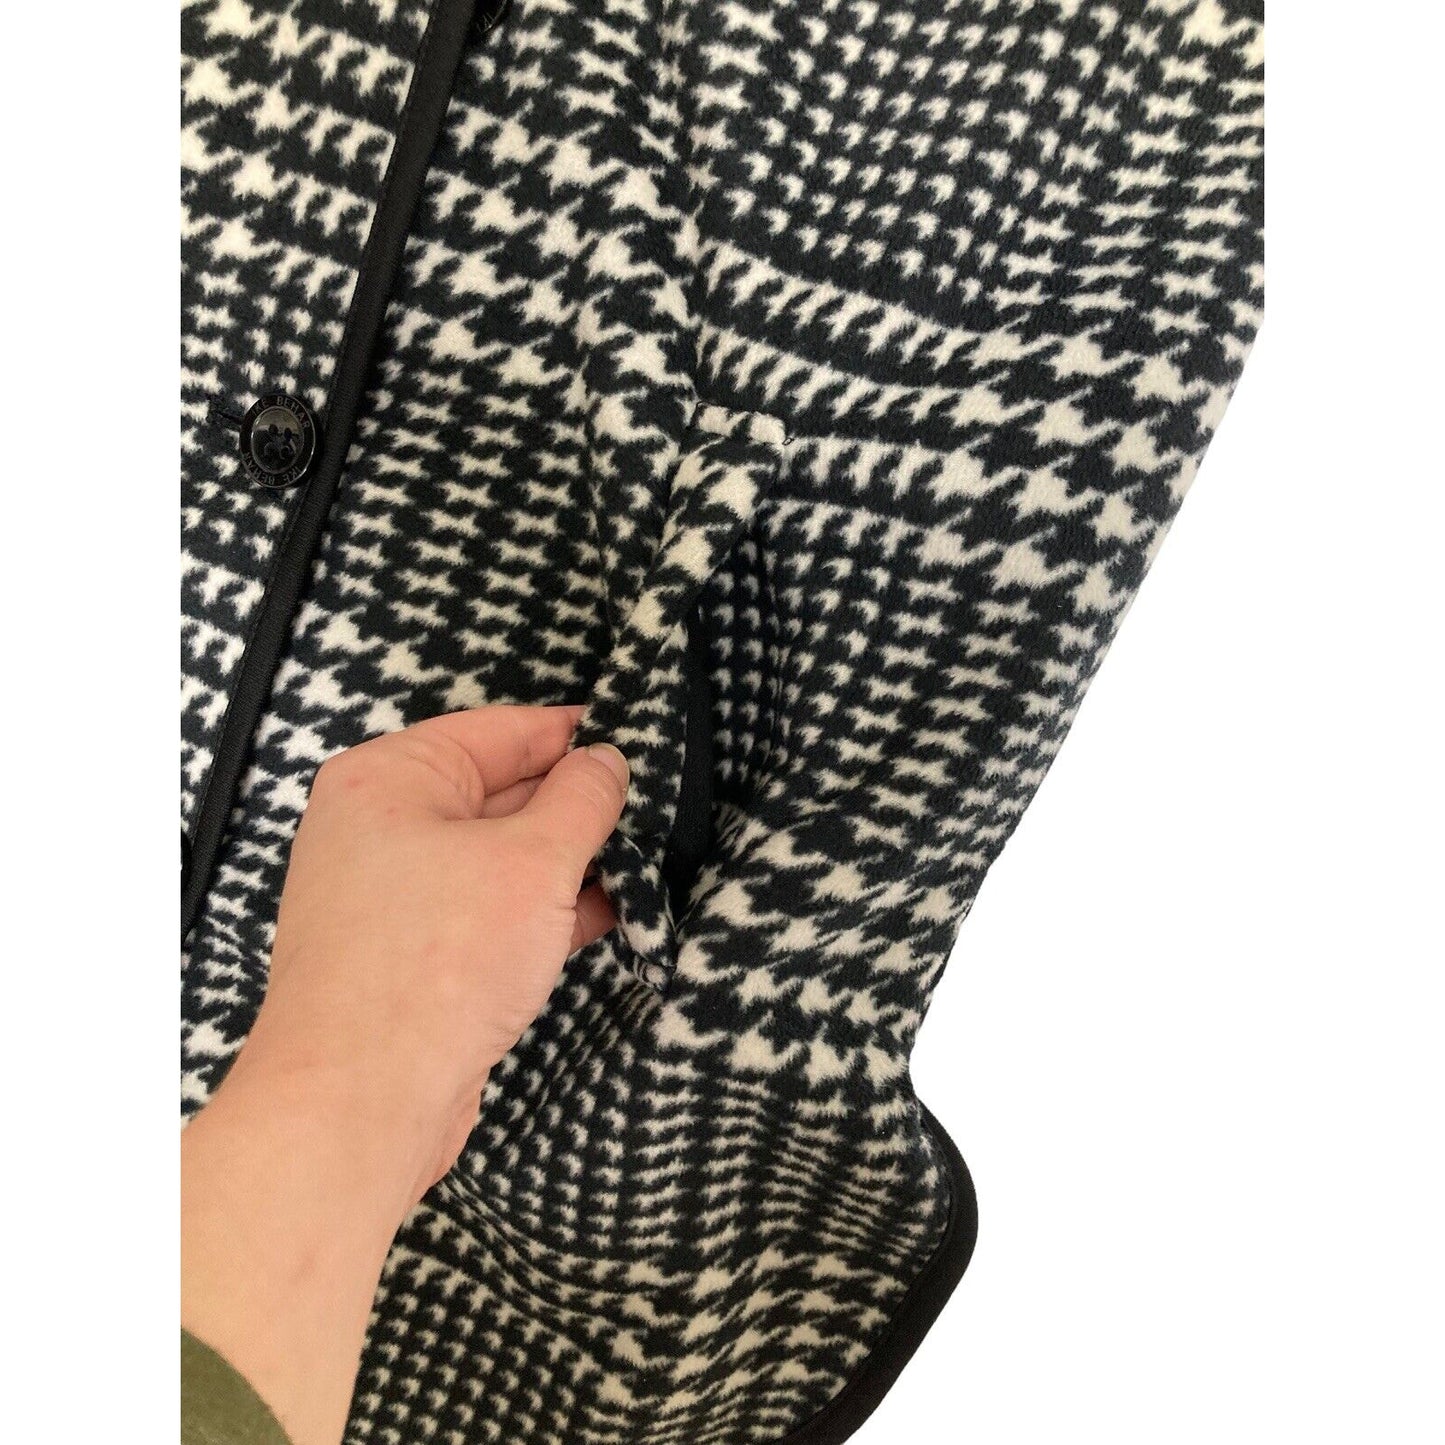 Ike Behar Hooded Houndstooth Coat Black White Fur lining Size Small Fleece